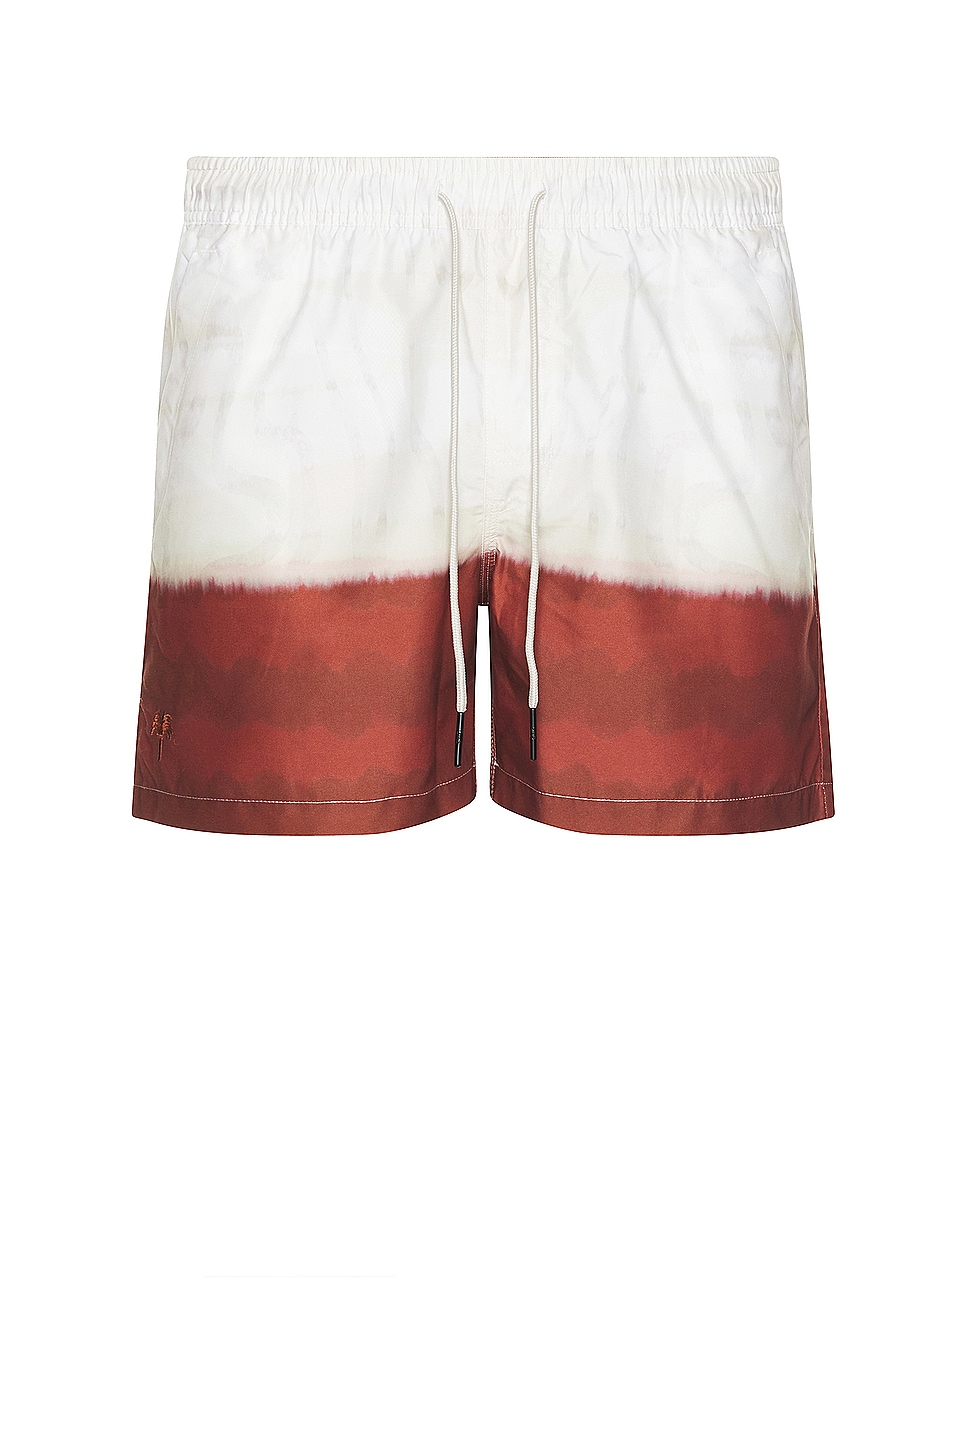 Image 1 of OAS Vista Swim Shorts in White & Red